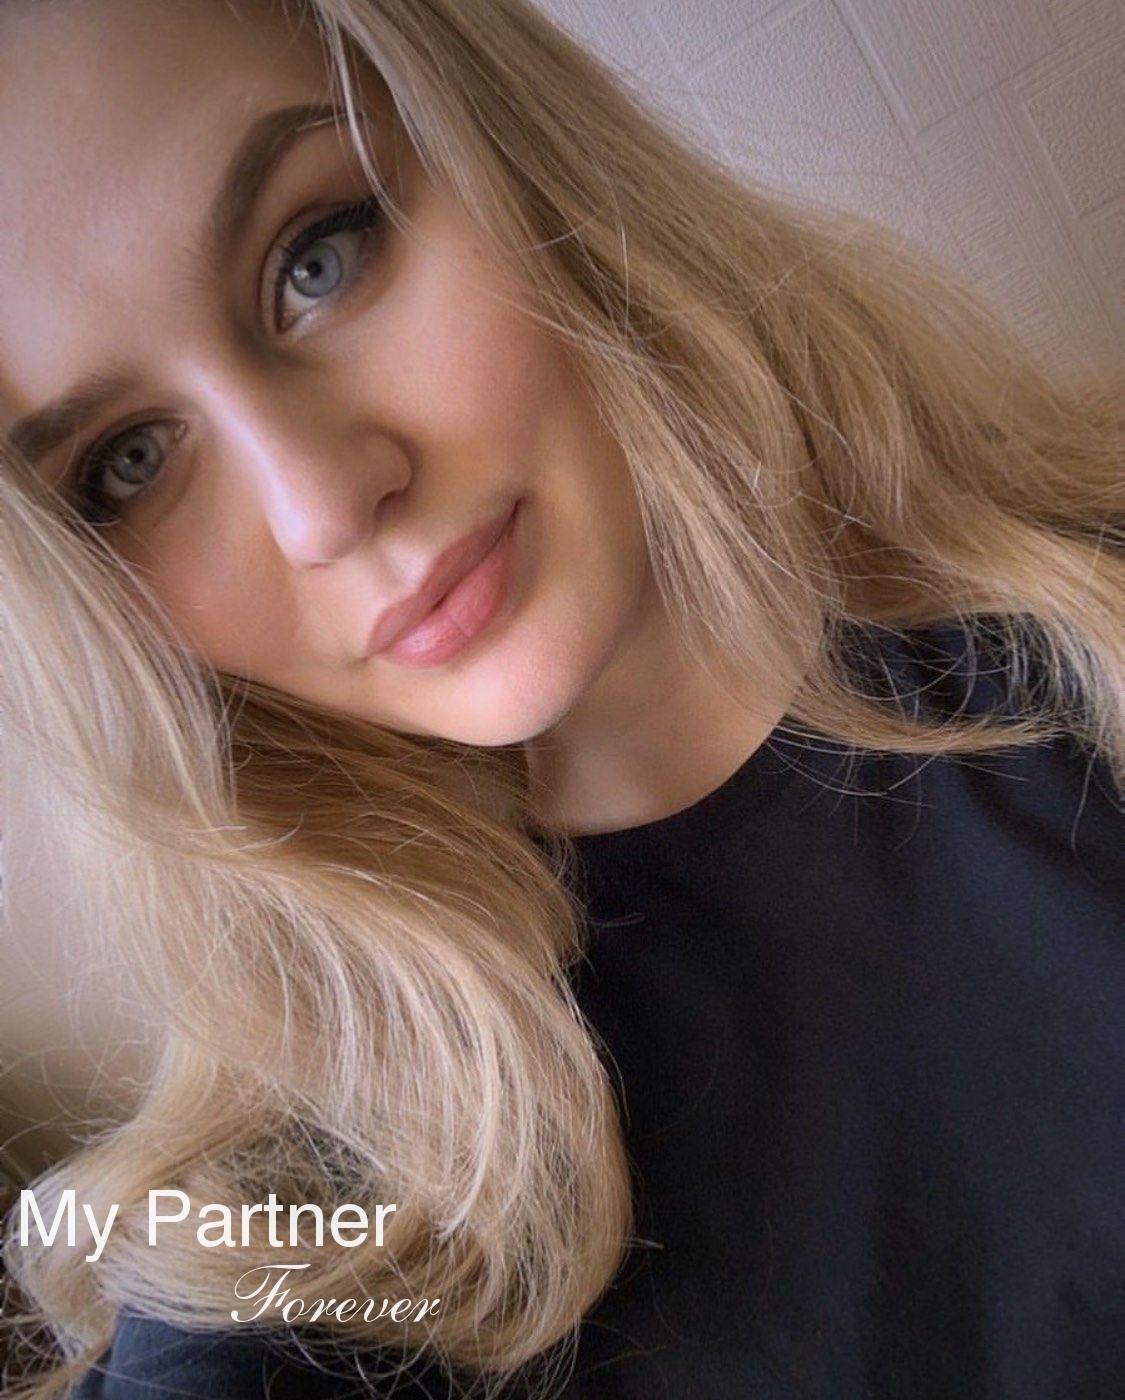 Datingsite to Meet Charming Ukrainian Girl Ulyana from Kiev, Ukraine